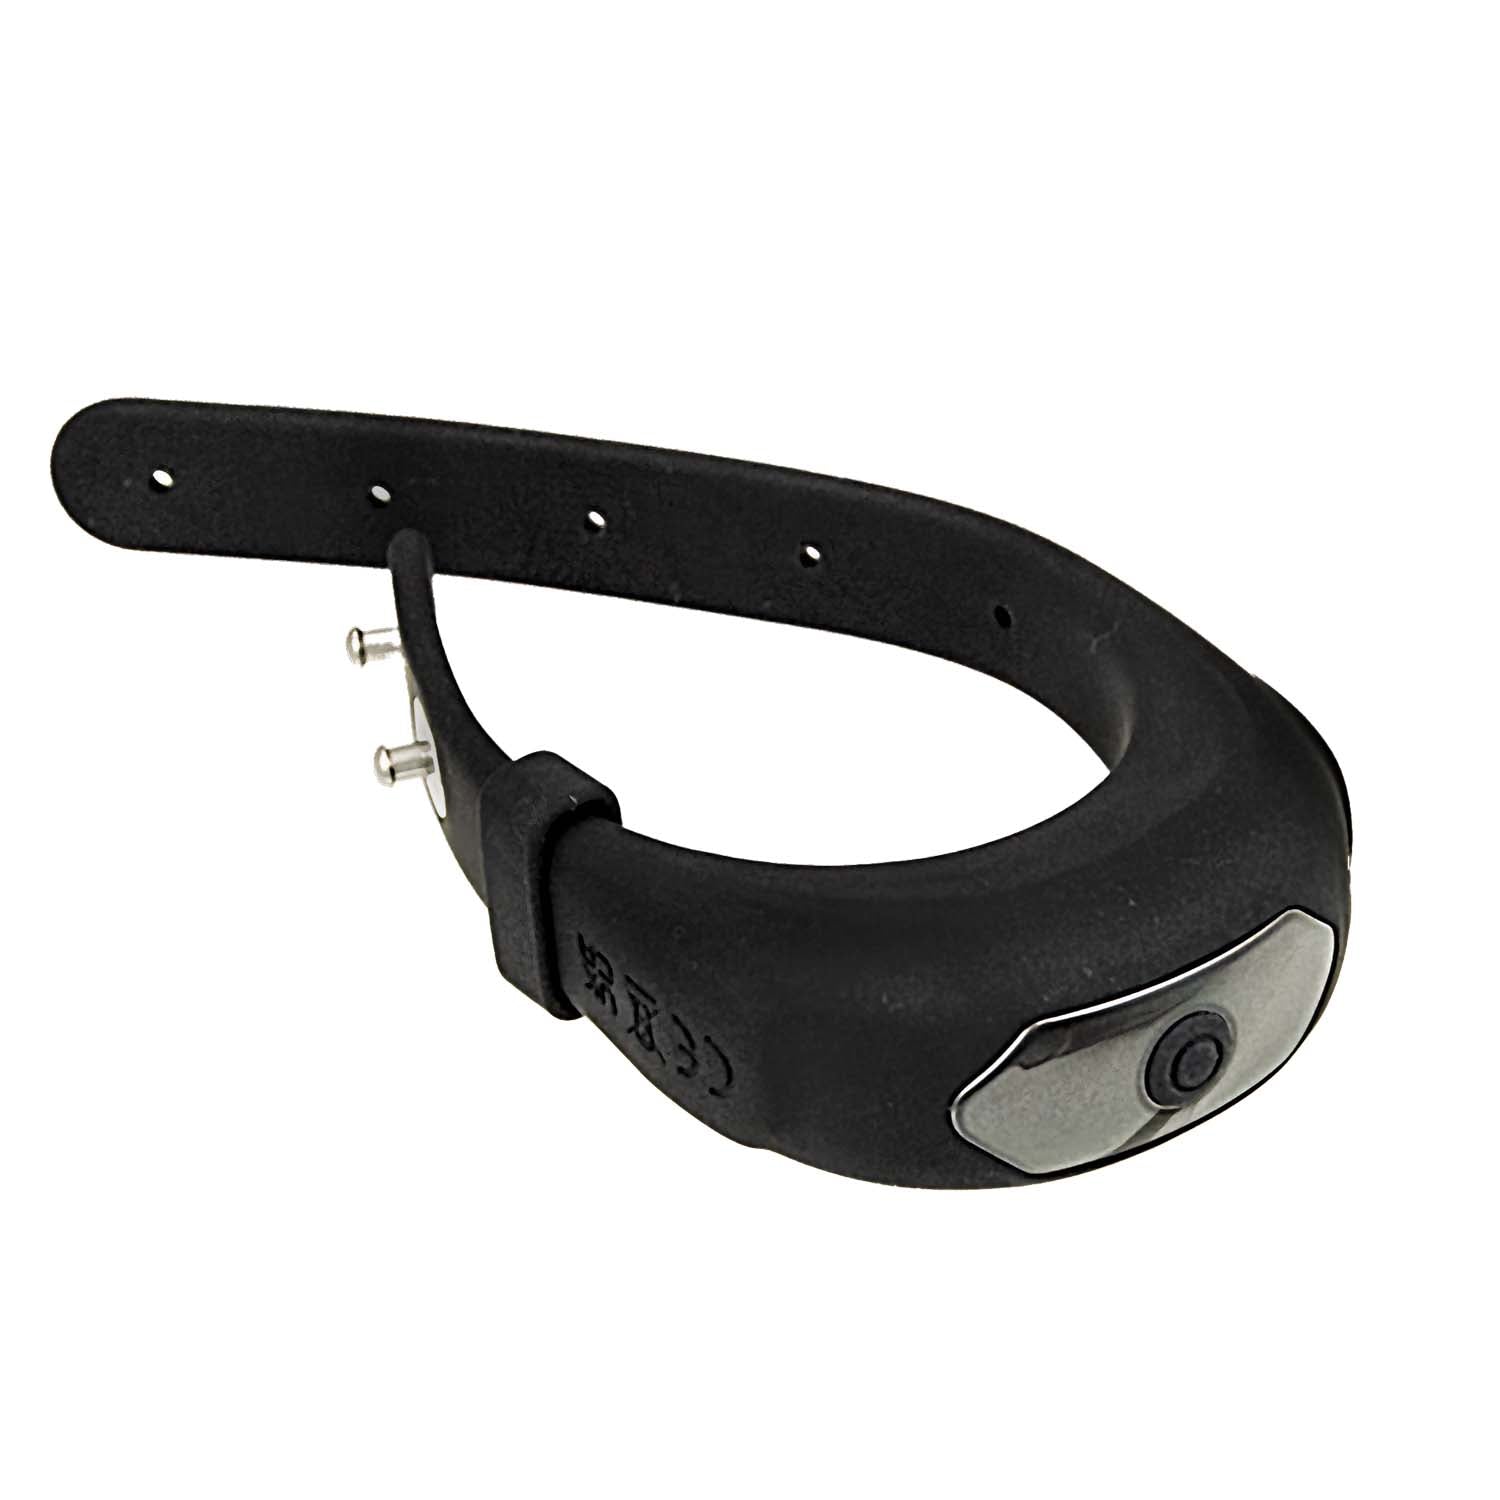 COCKPOWER Adjustable Belt Ring - Black | CheapLubes.com